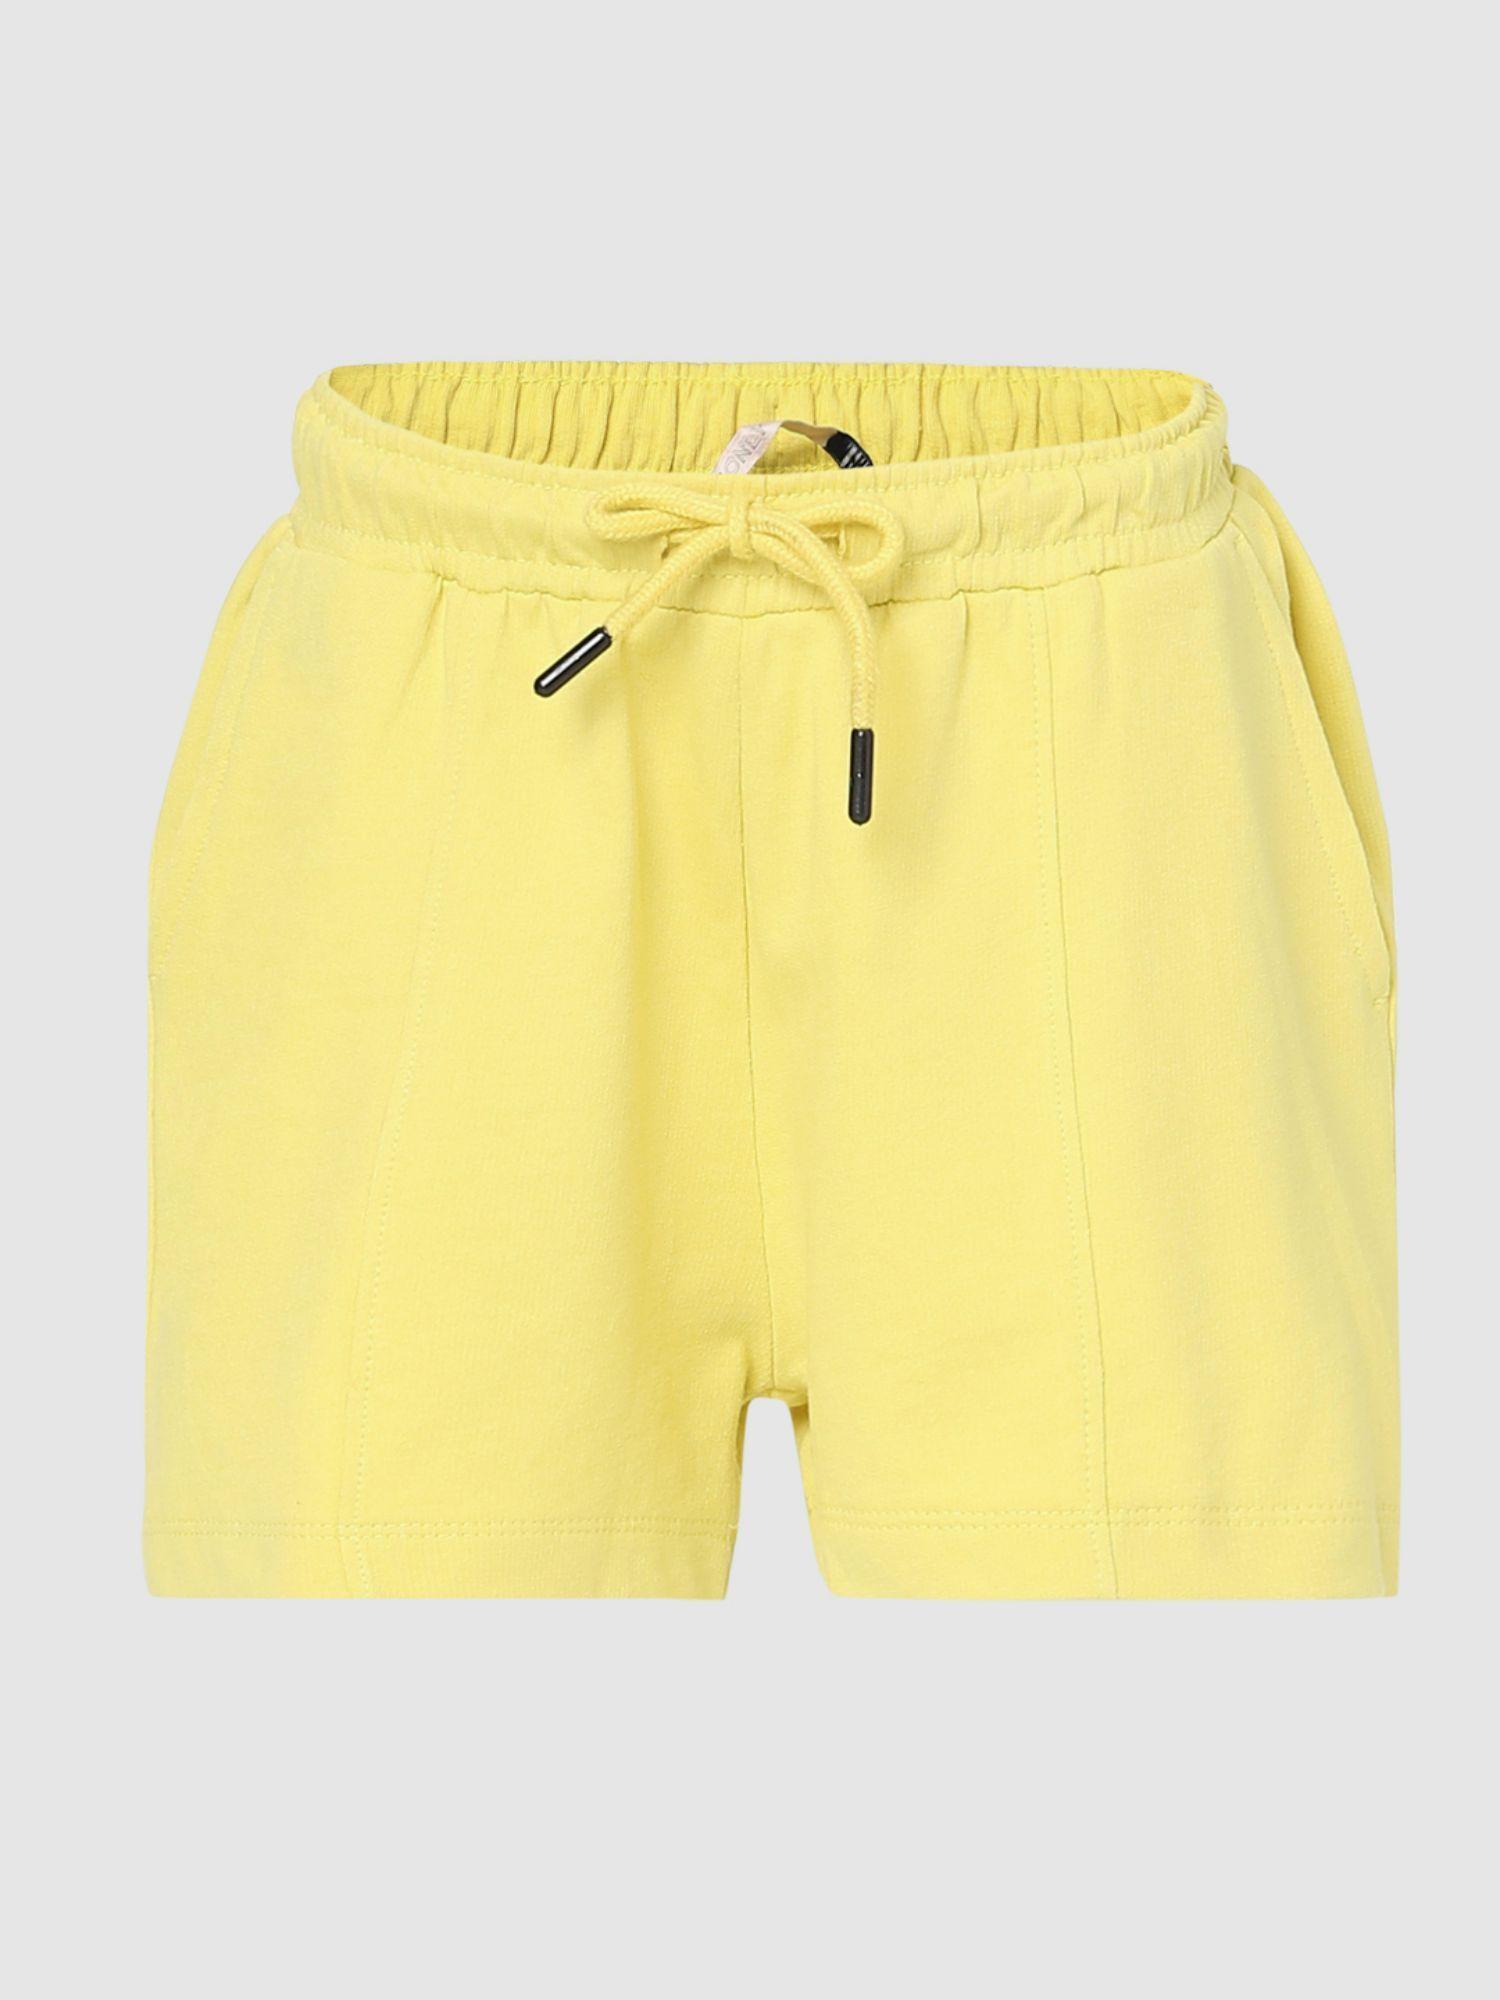 girls solid yellow shorts